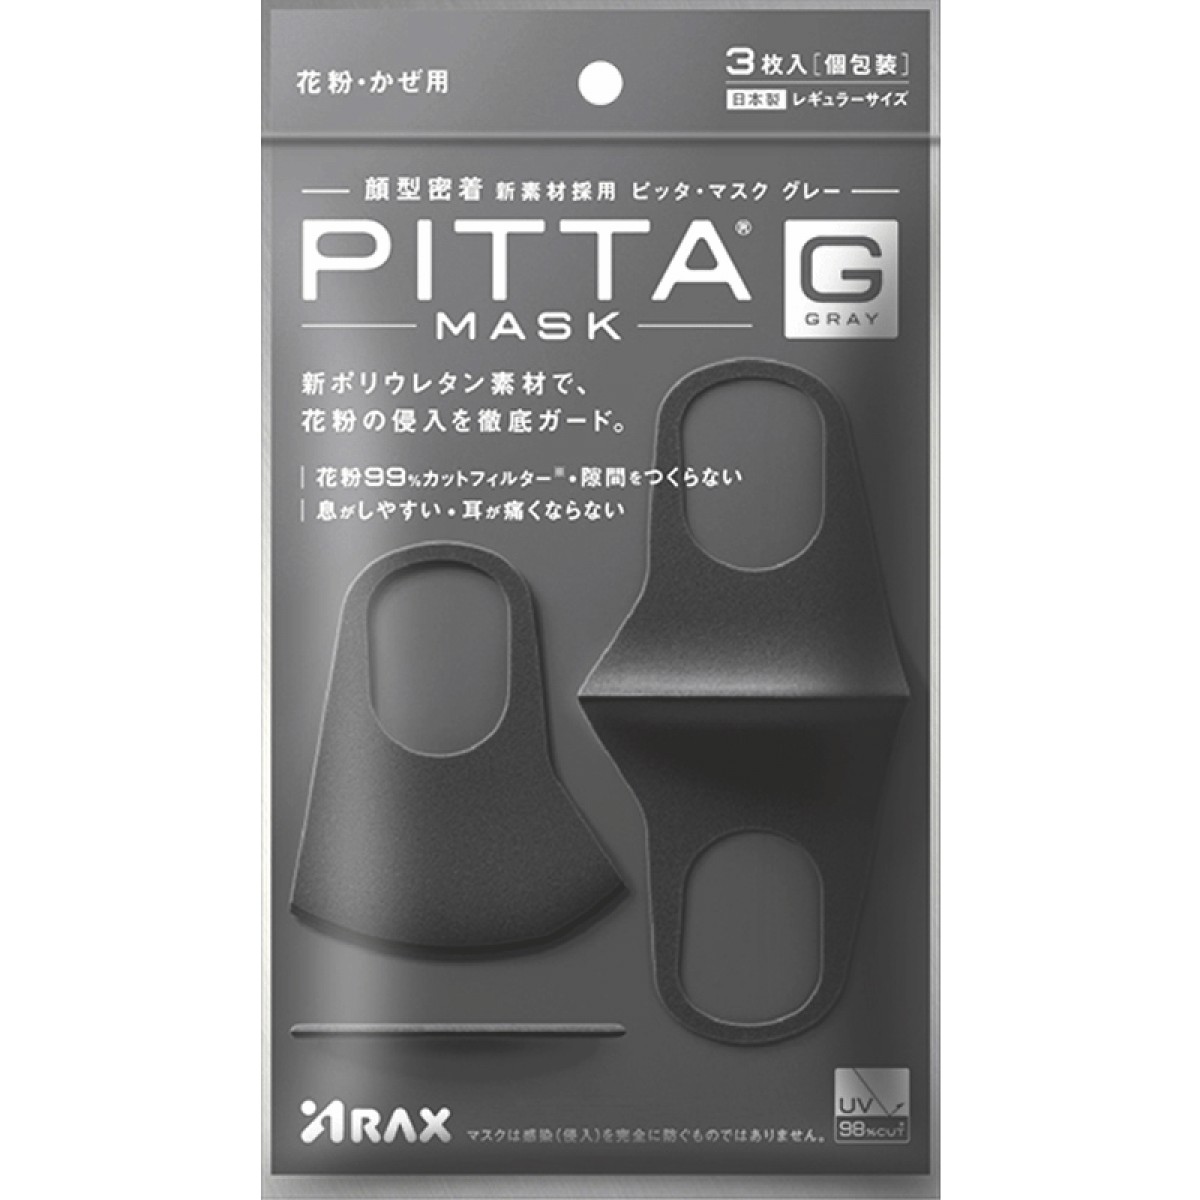 PITTA MASK防尘防雾霾口罩 透气可清洗3只装 成人款 黑灰色 日版